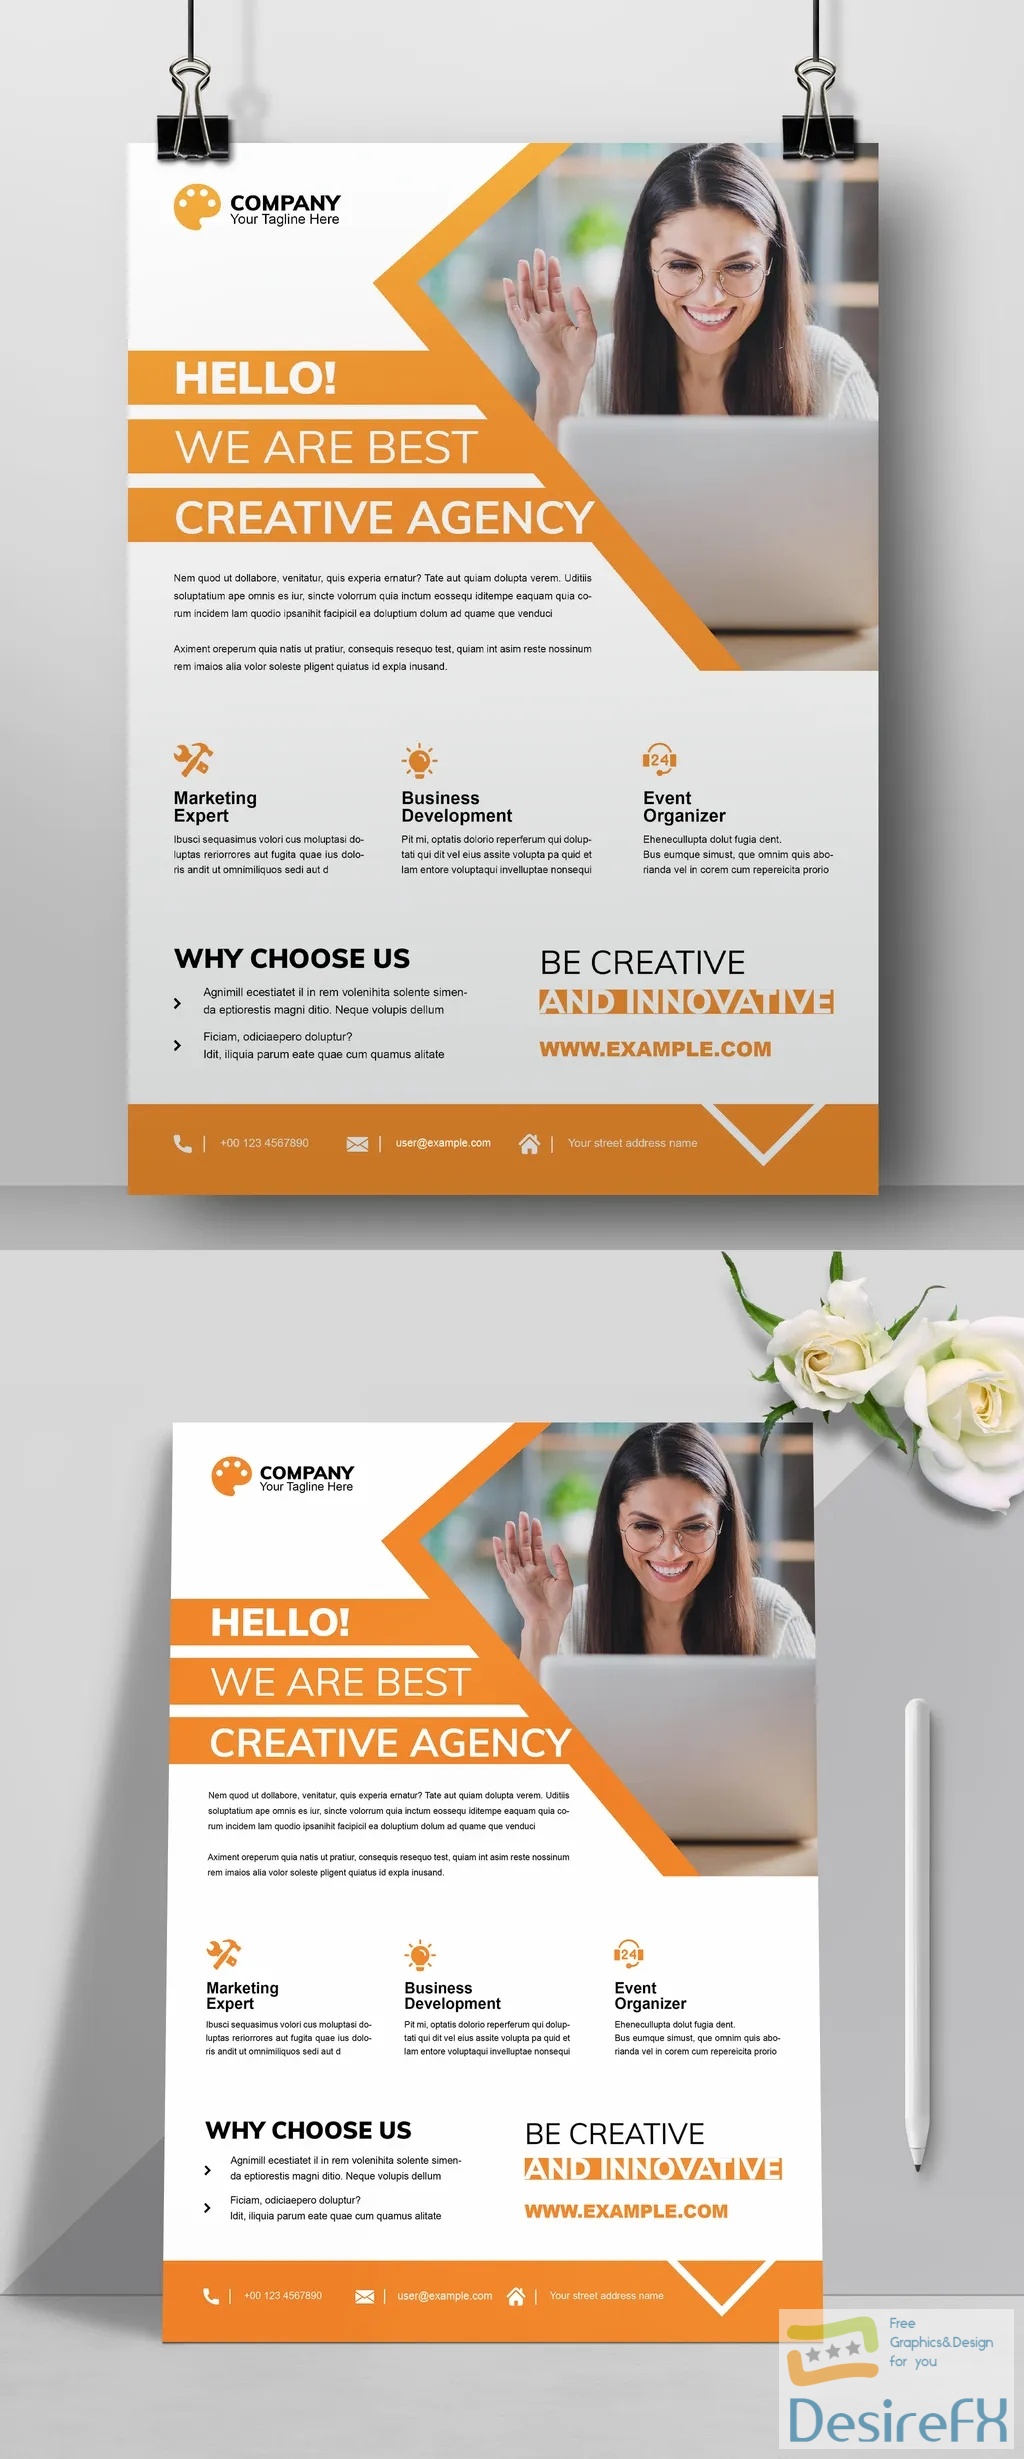 Adobestock - Modern Business Flyer Design Templates 718529881